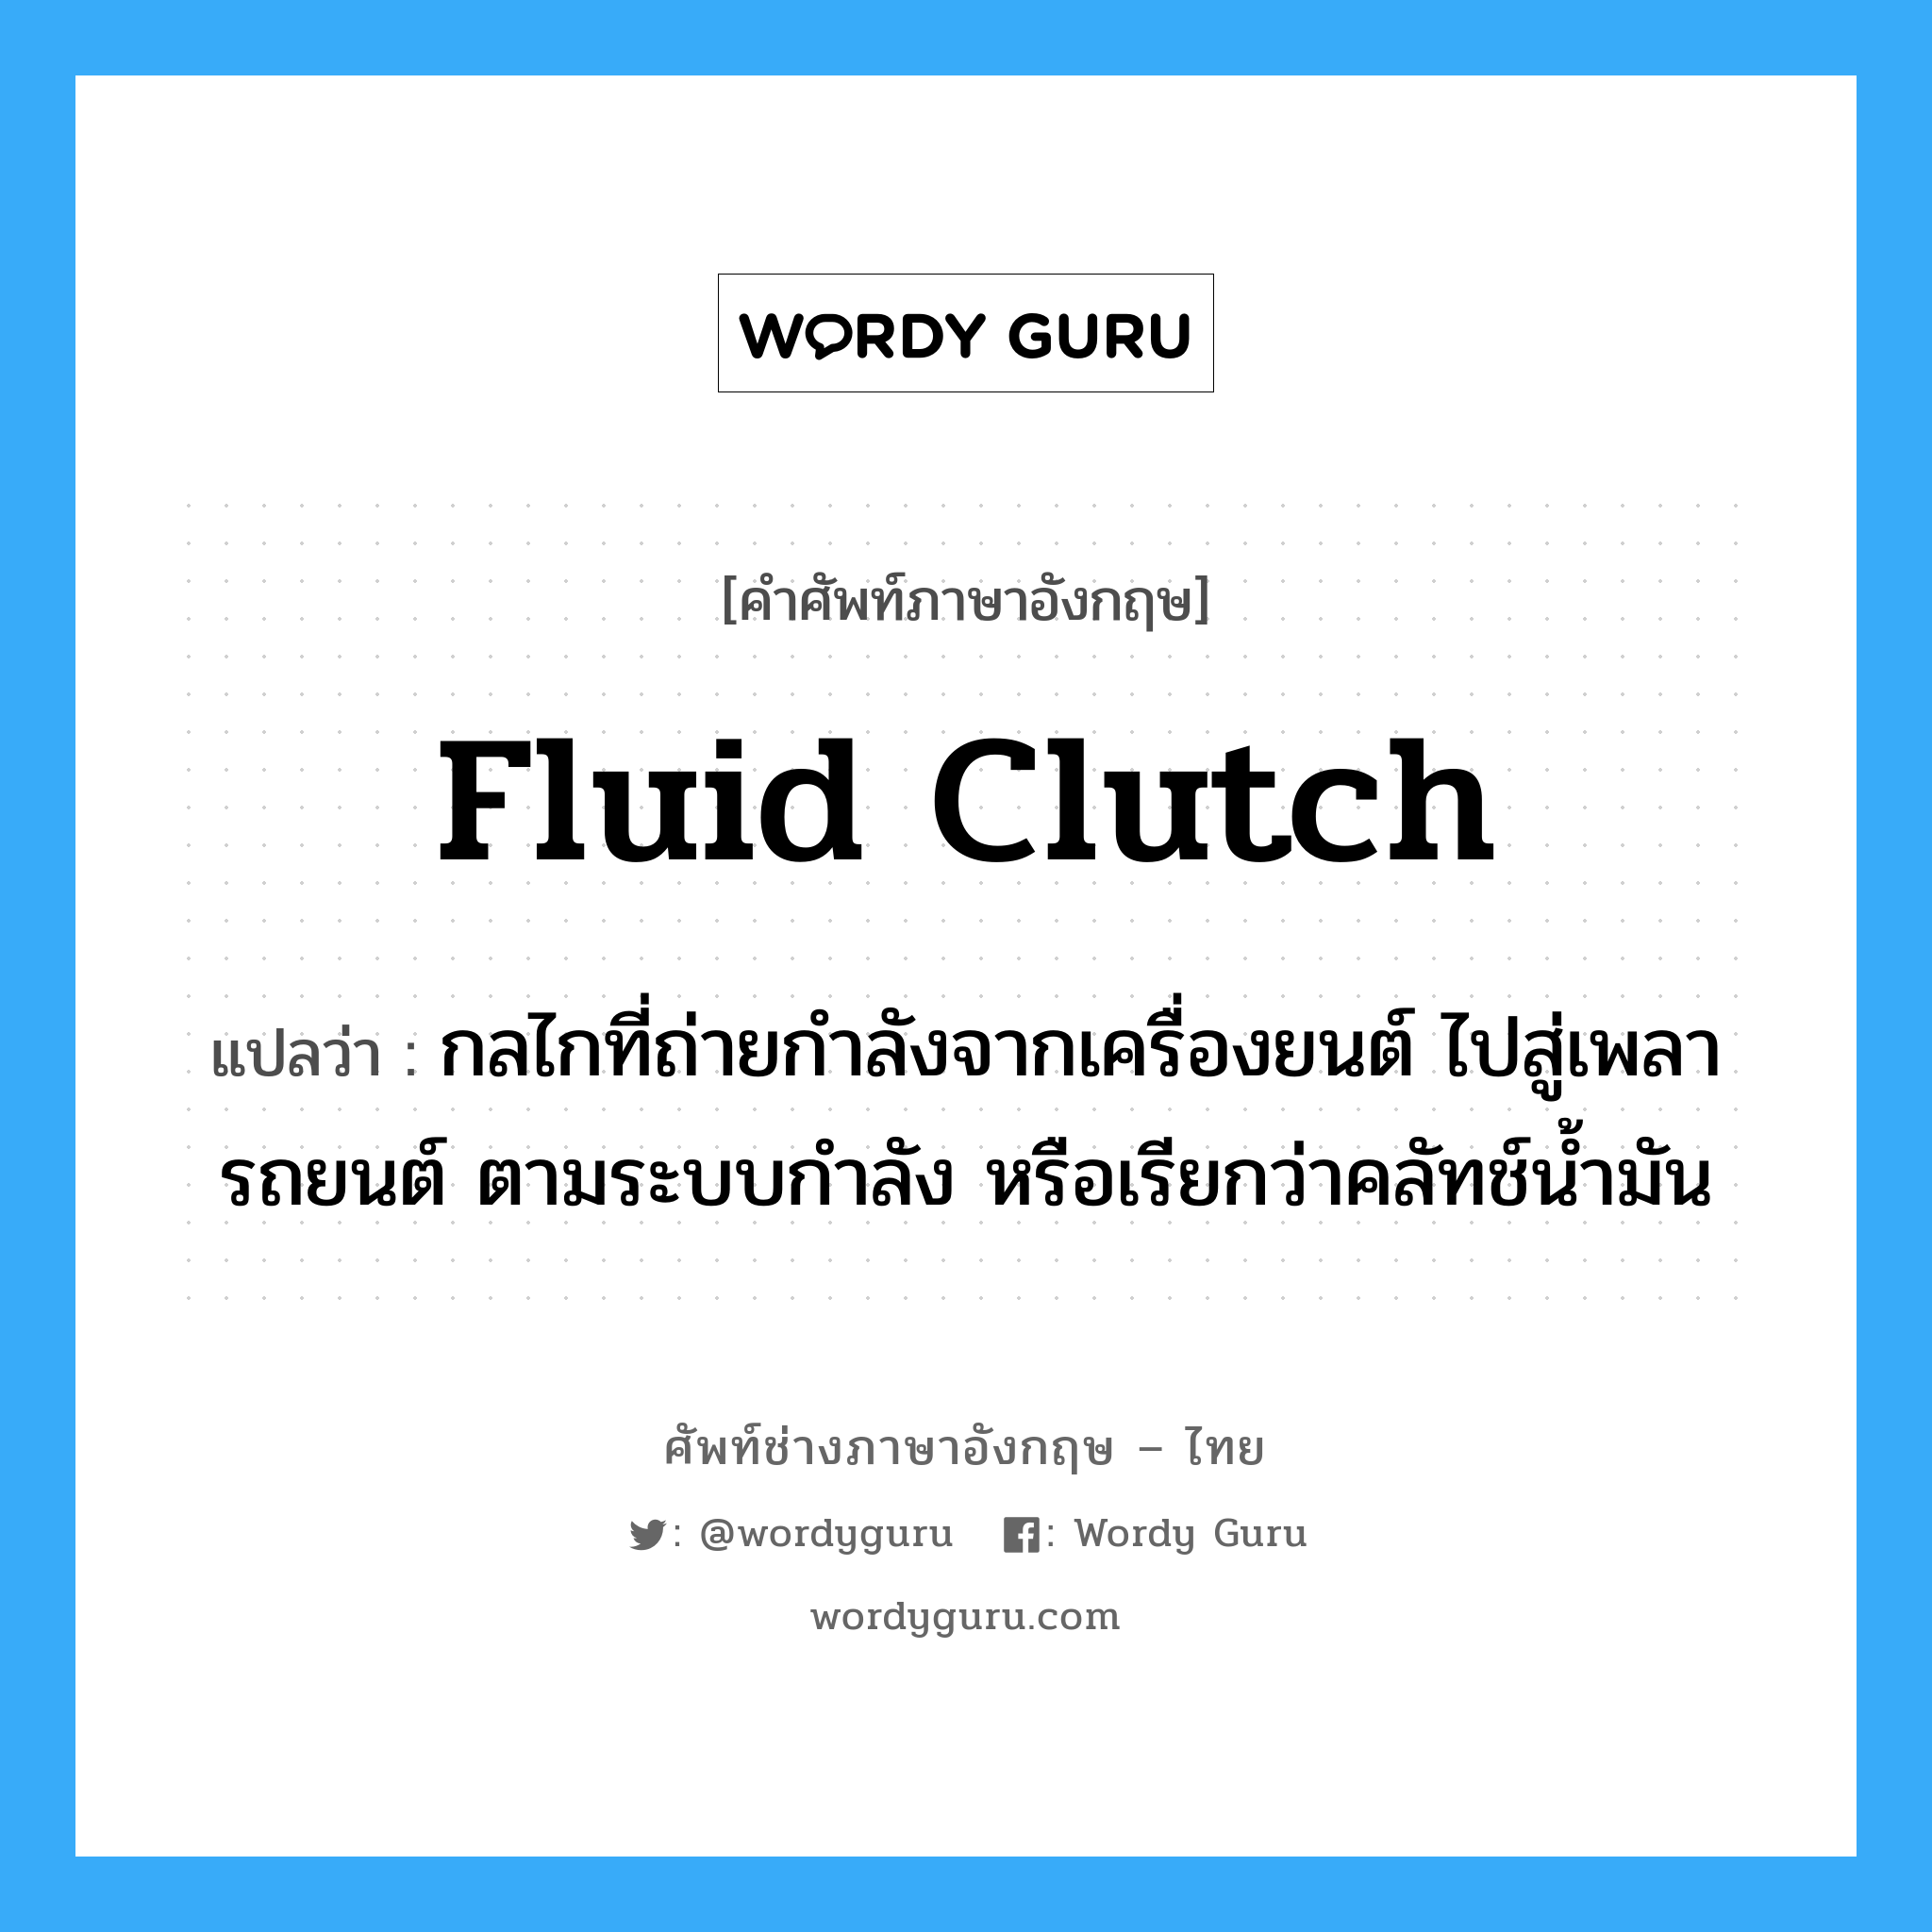 fluid clutch แปลว่า?, คำศัพท์ช่างภาษาอังกฤษ - ไทย fluid clutch คำศัพท์ภาษาอังกฤษ fluid clutch แปลว่า กลไกที่ถ่ายกำลังจากเครื่องยนต์ ไปสู่เพลารถยนต์ ตามระบบกำลัง หรือเรียกว่าคลัทช์น้ำมัน